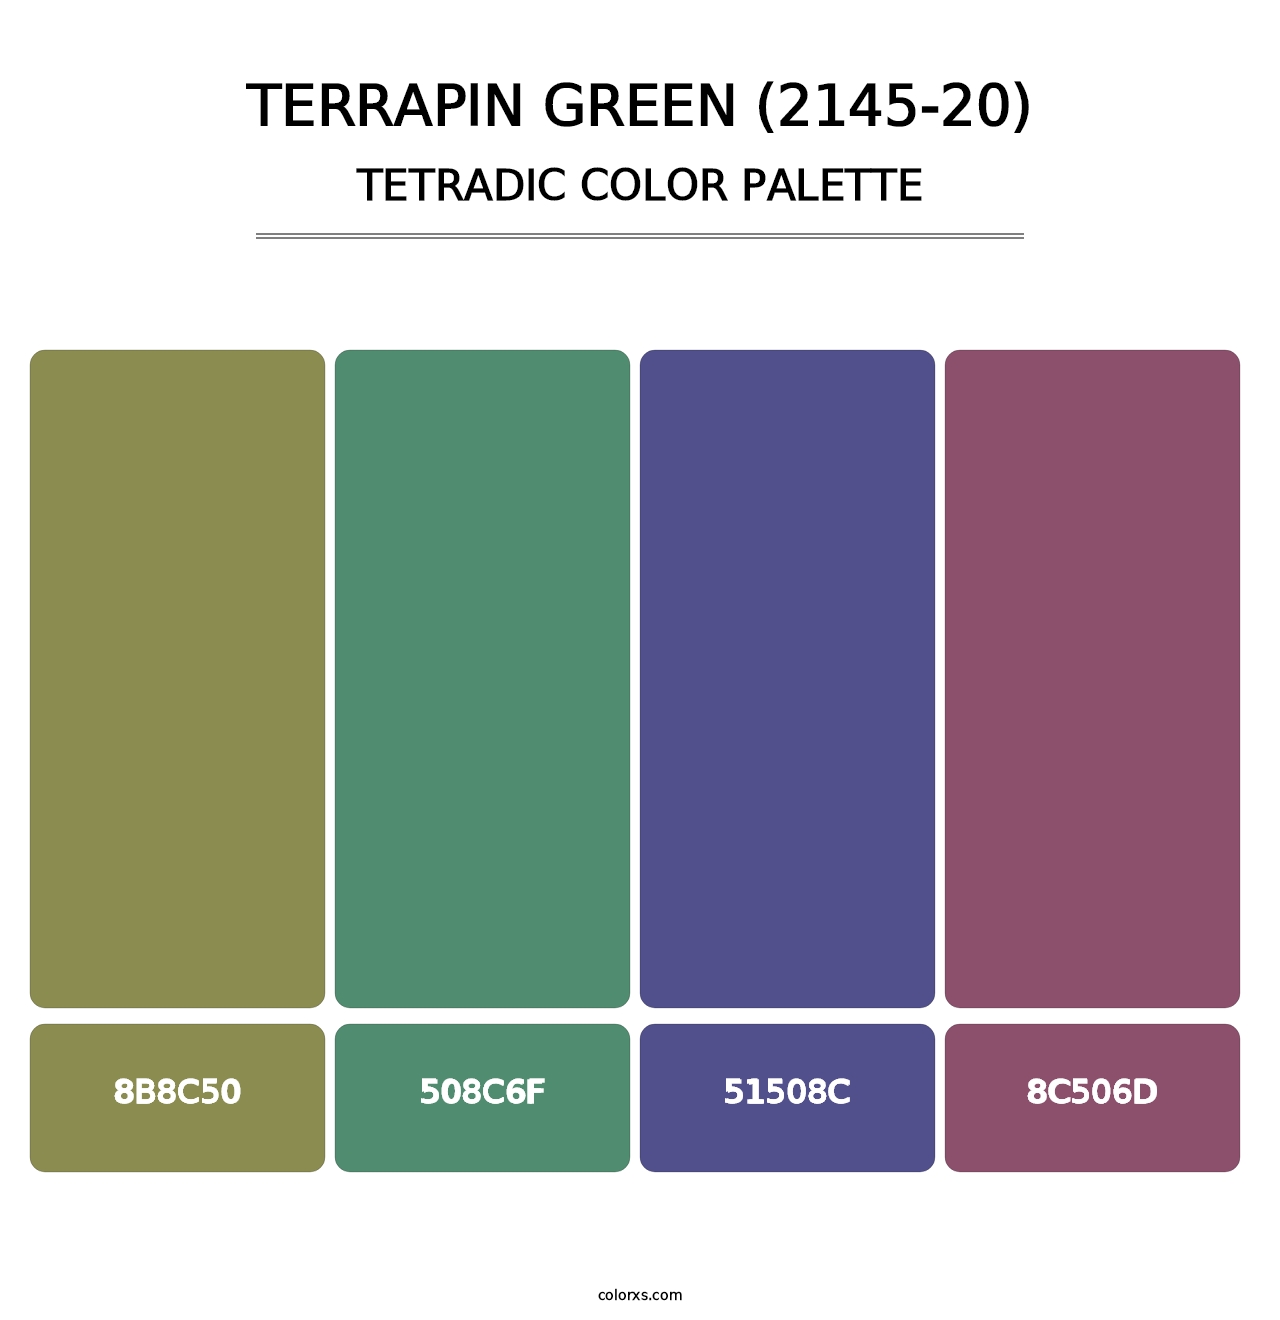 Terrapin Green (2145-20) - Tetradic Color Palette